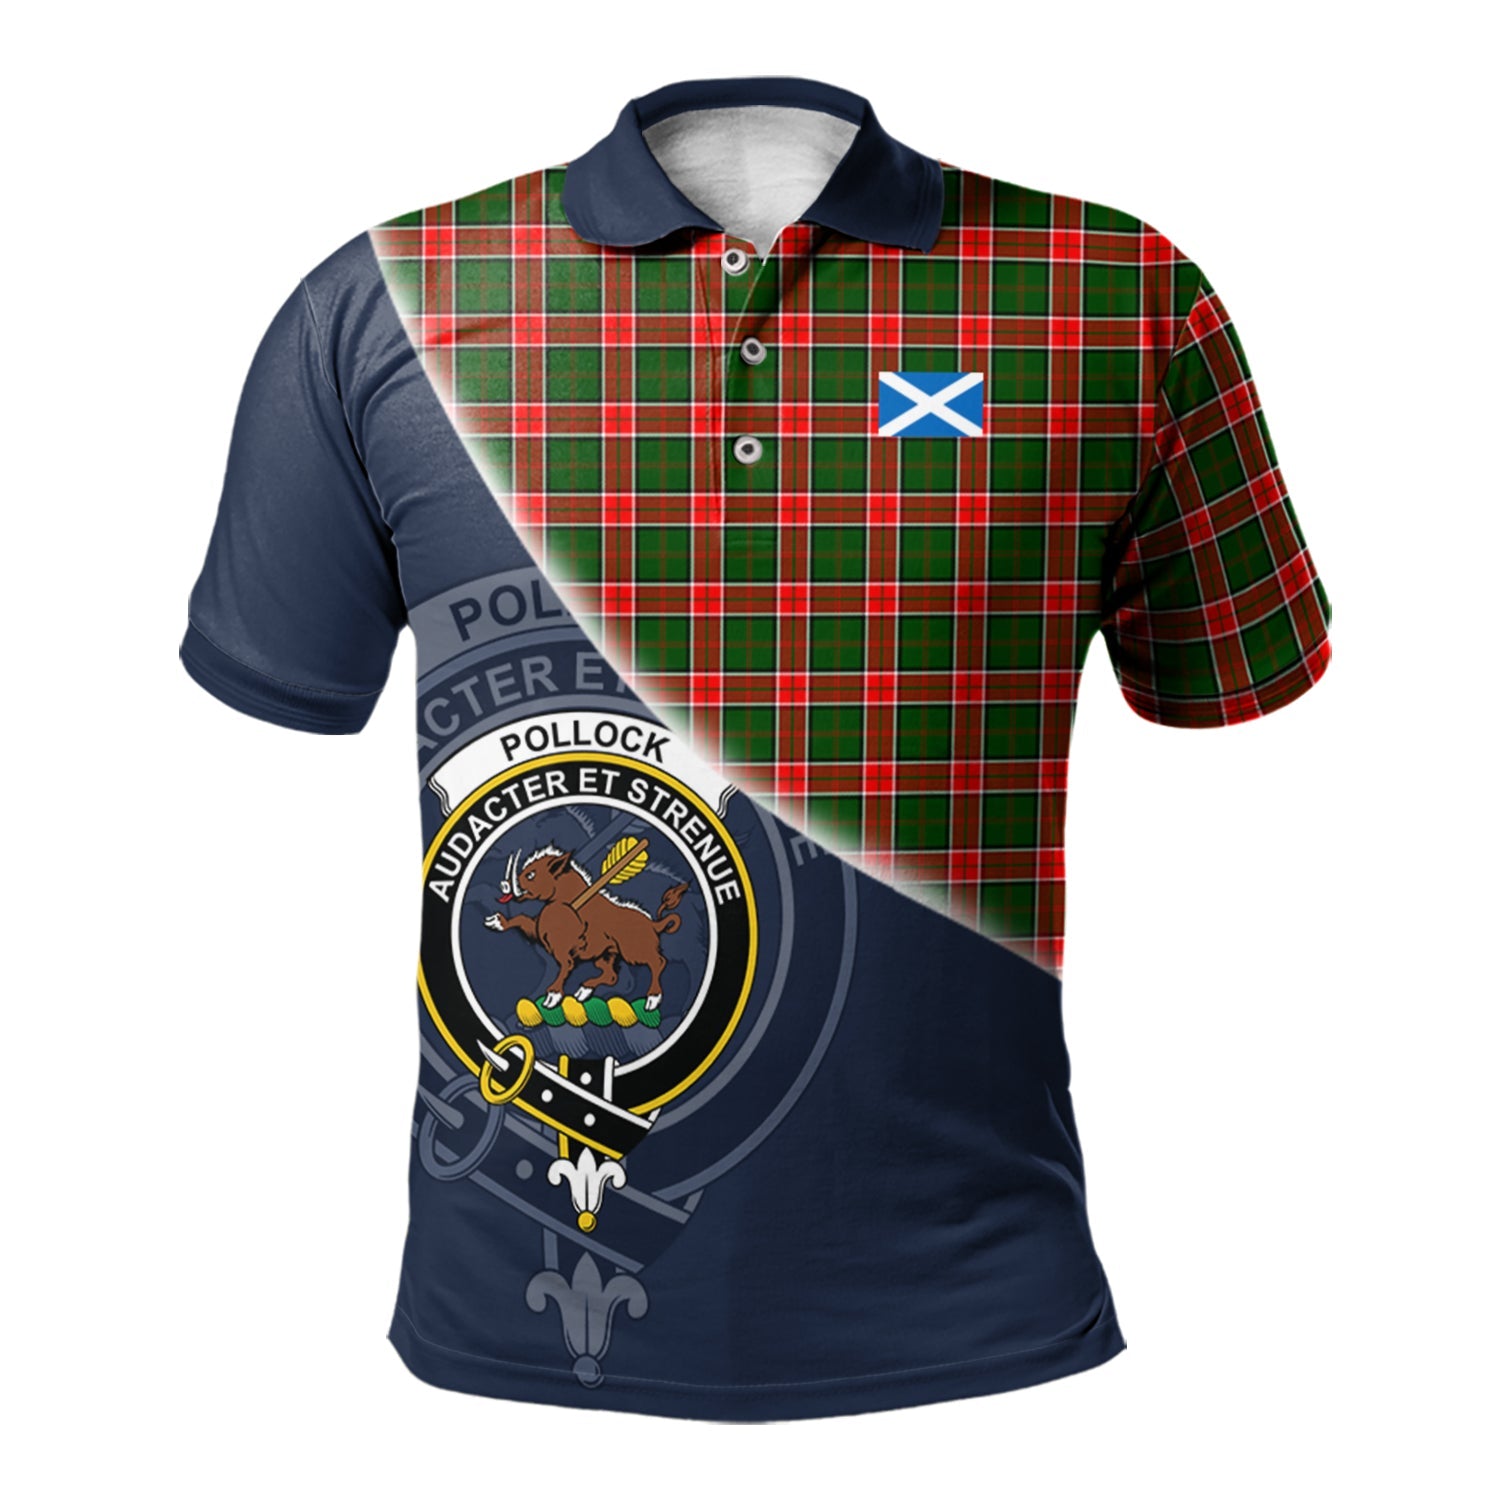 scottish-pollock-modern-clan-crest-tartan-scotland-flag-half-style-polo-shirt